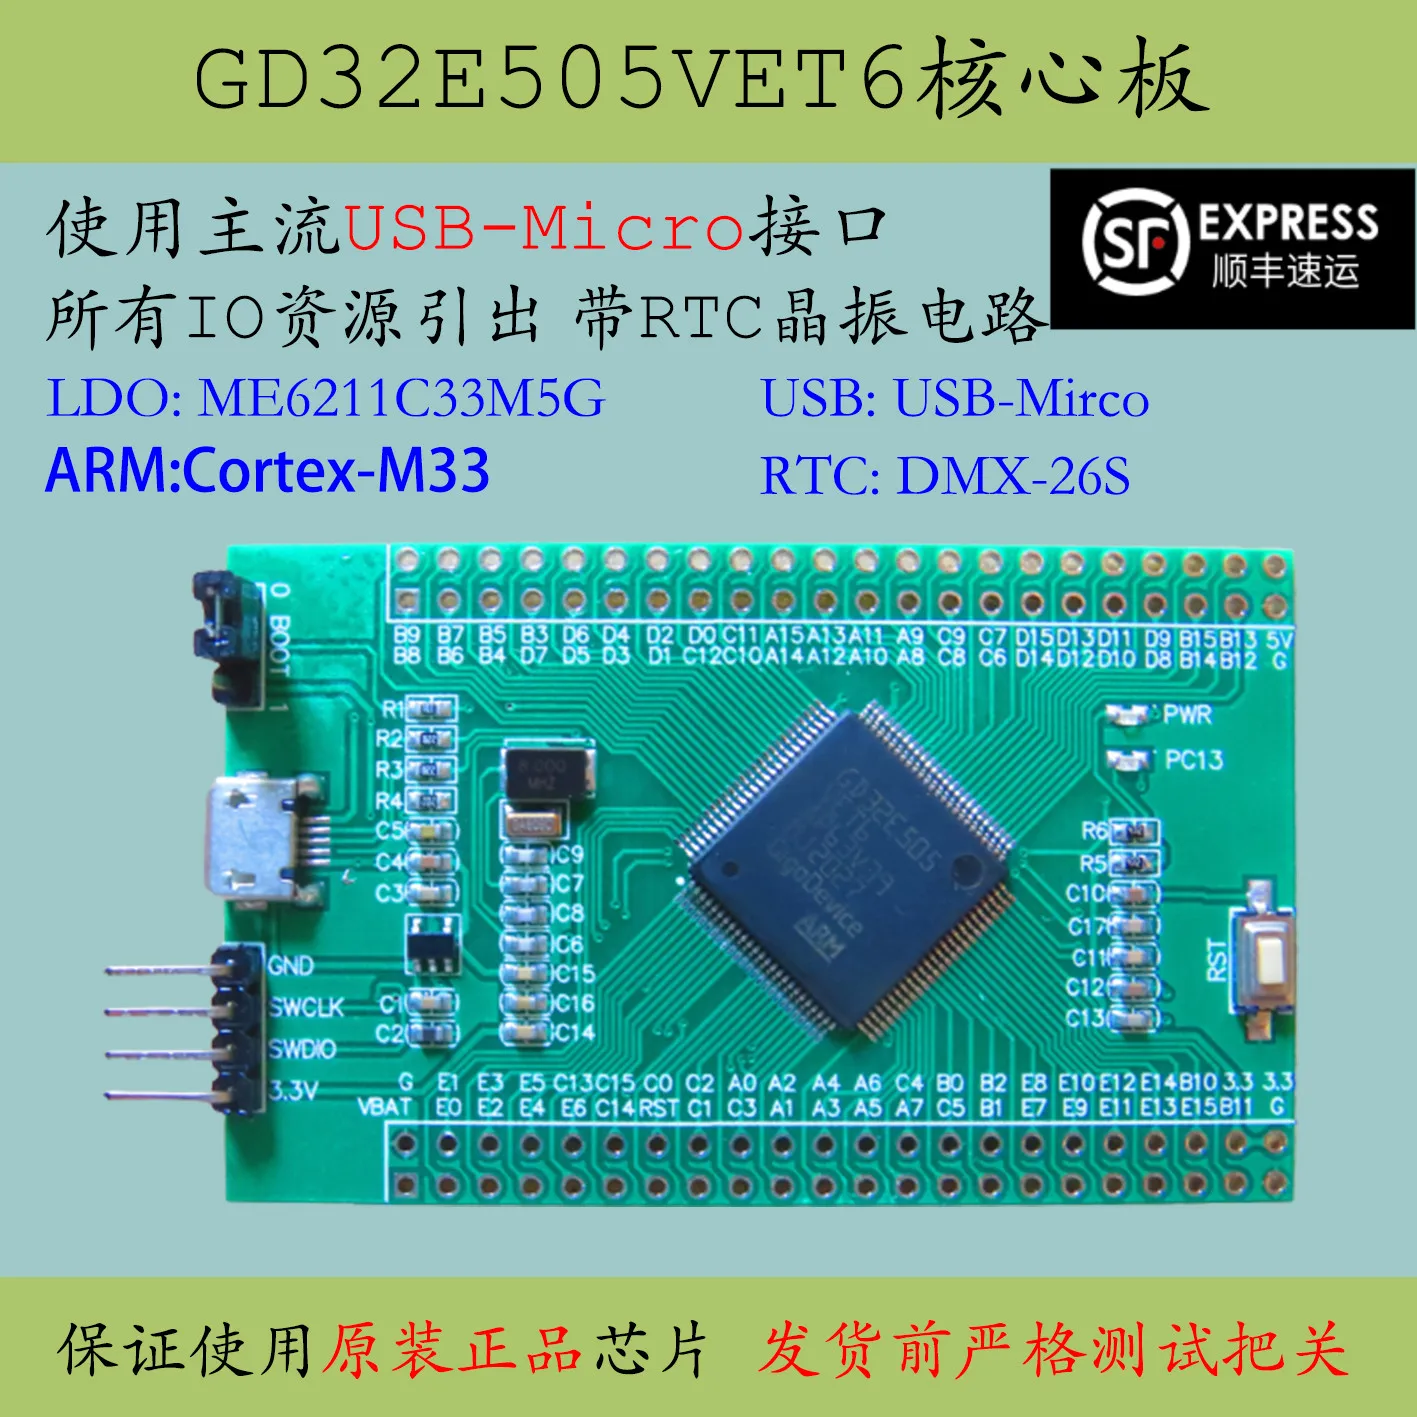 

Gd32e505vet6 core board replaces the minimum system development board of cortex m33arm